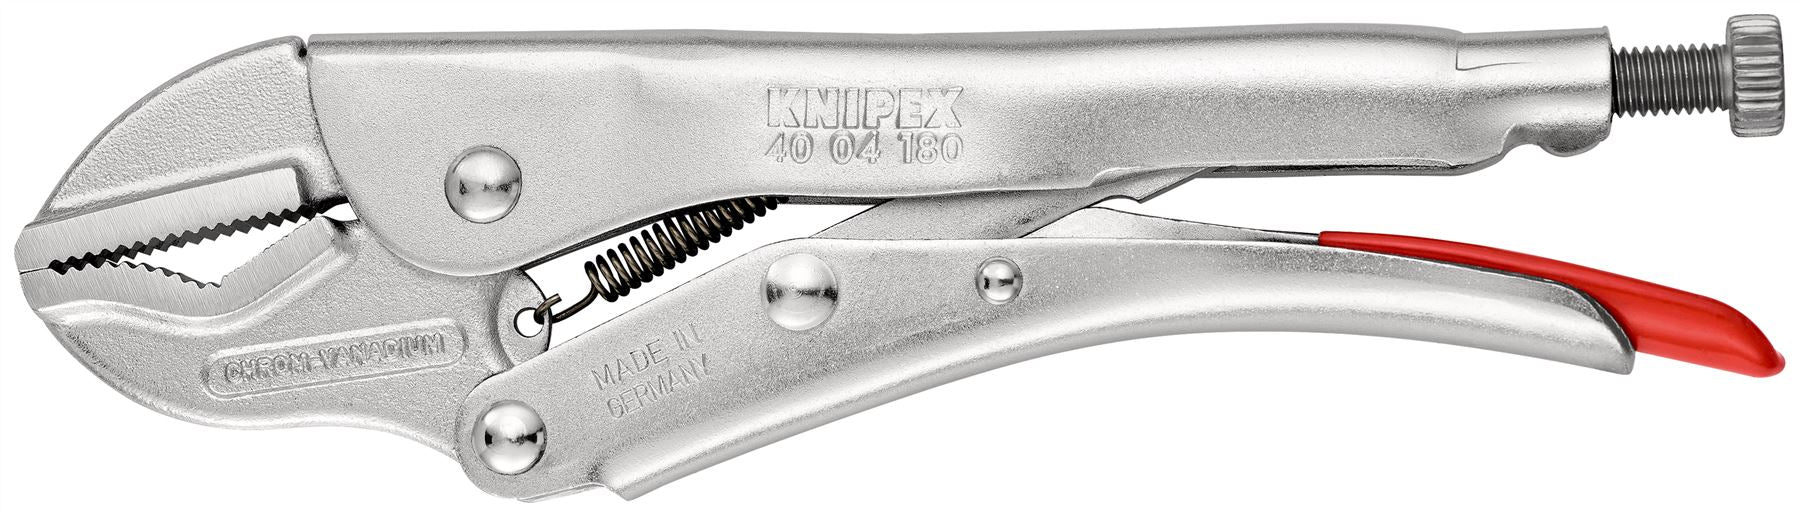 KNIPEX Universal Grip Locking Pliers Mole Grips 180mm Galvanised 40 04 180